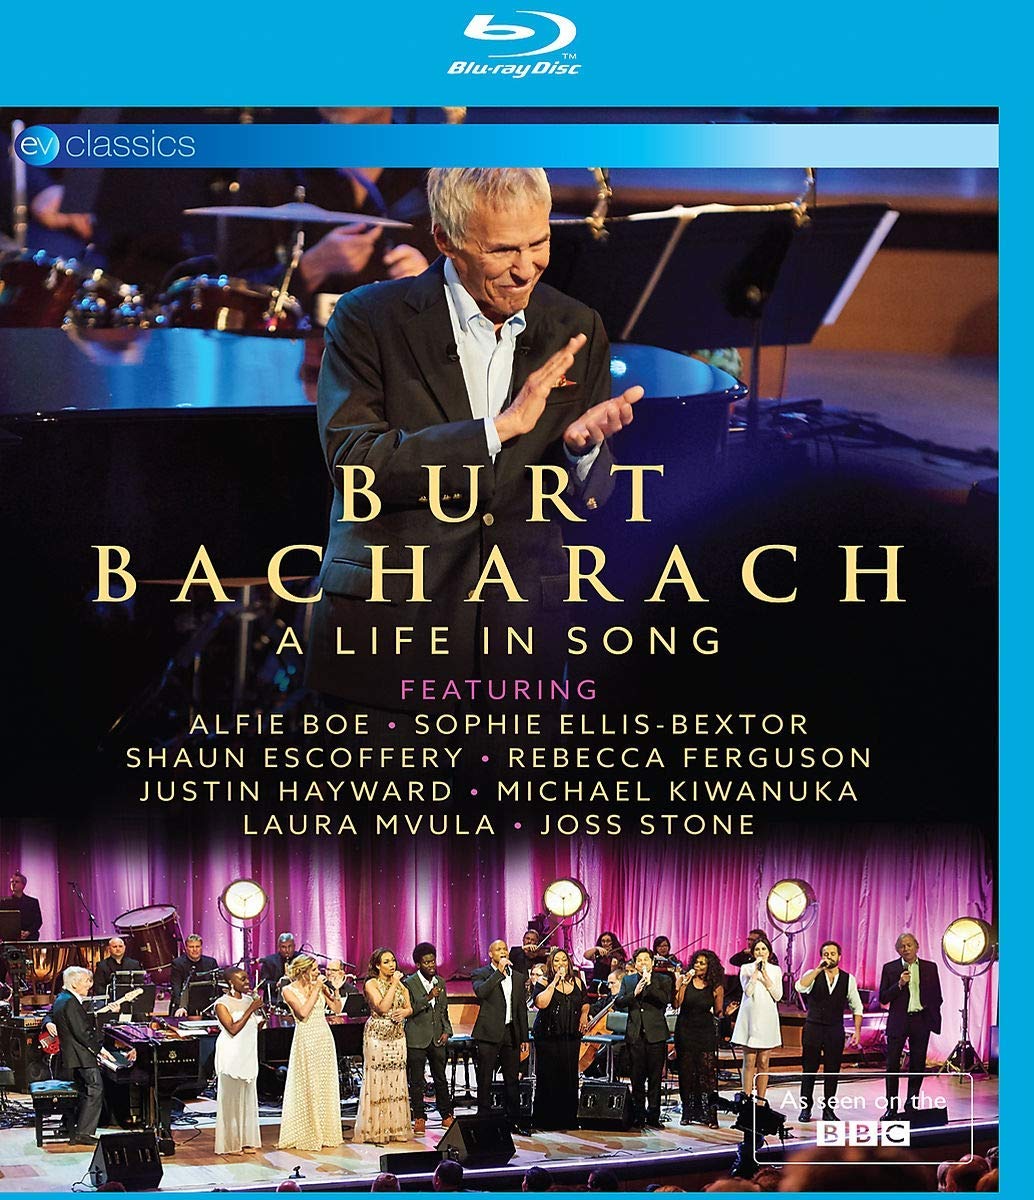 BURT BACHARACH / バート・バカラック / A LIFE IN SONG (DVD)